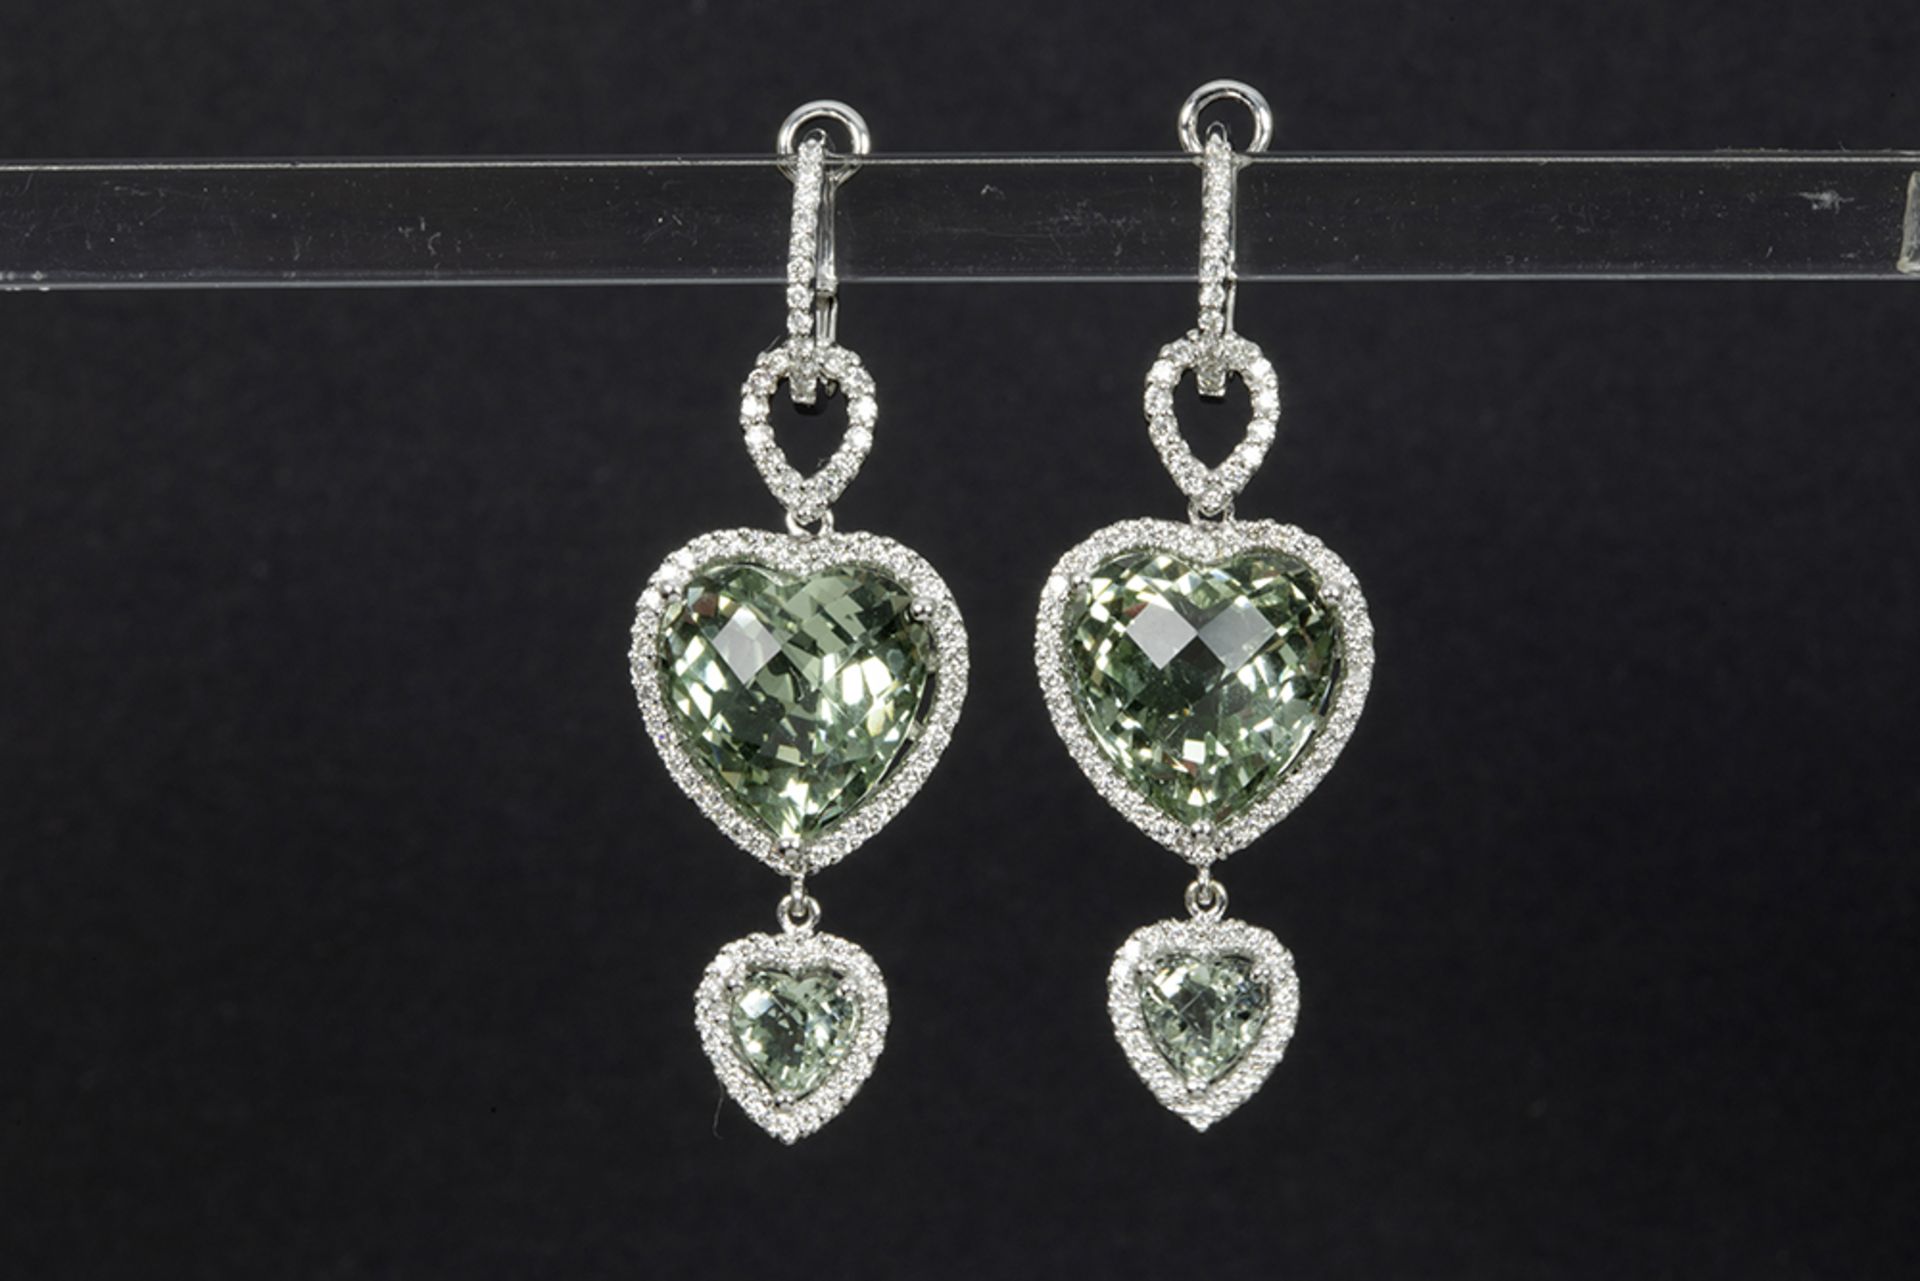 pair of earrings in white gold (18 carat) with ca 6 carat of quite rare prazeolite (green